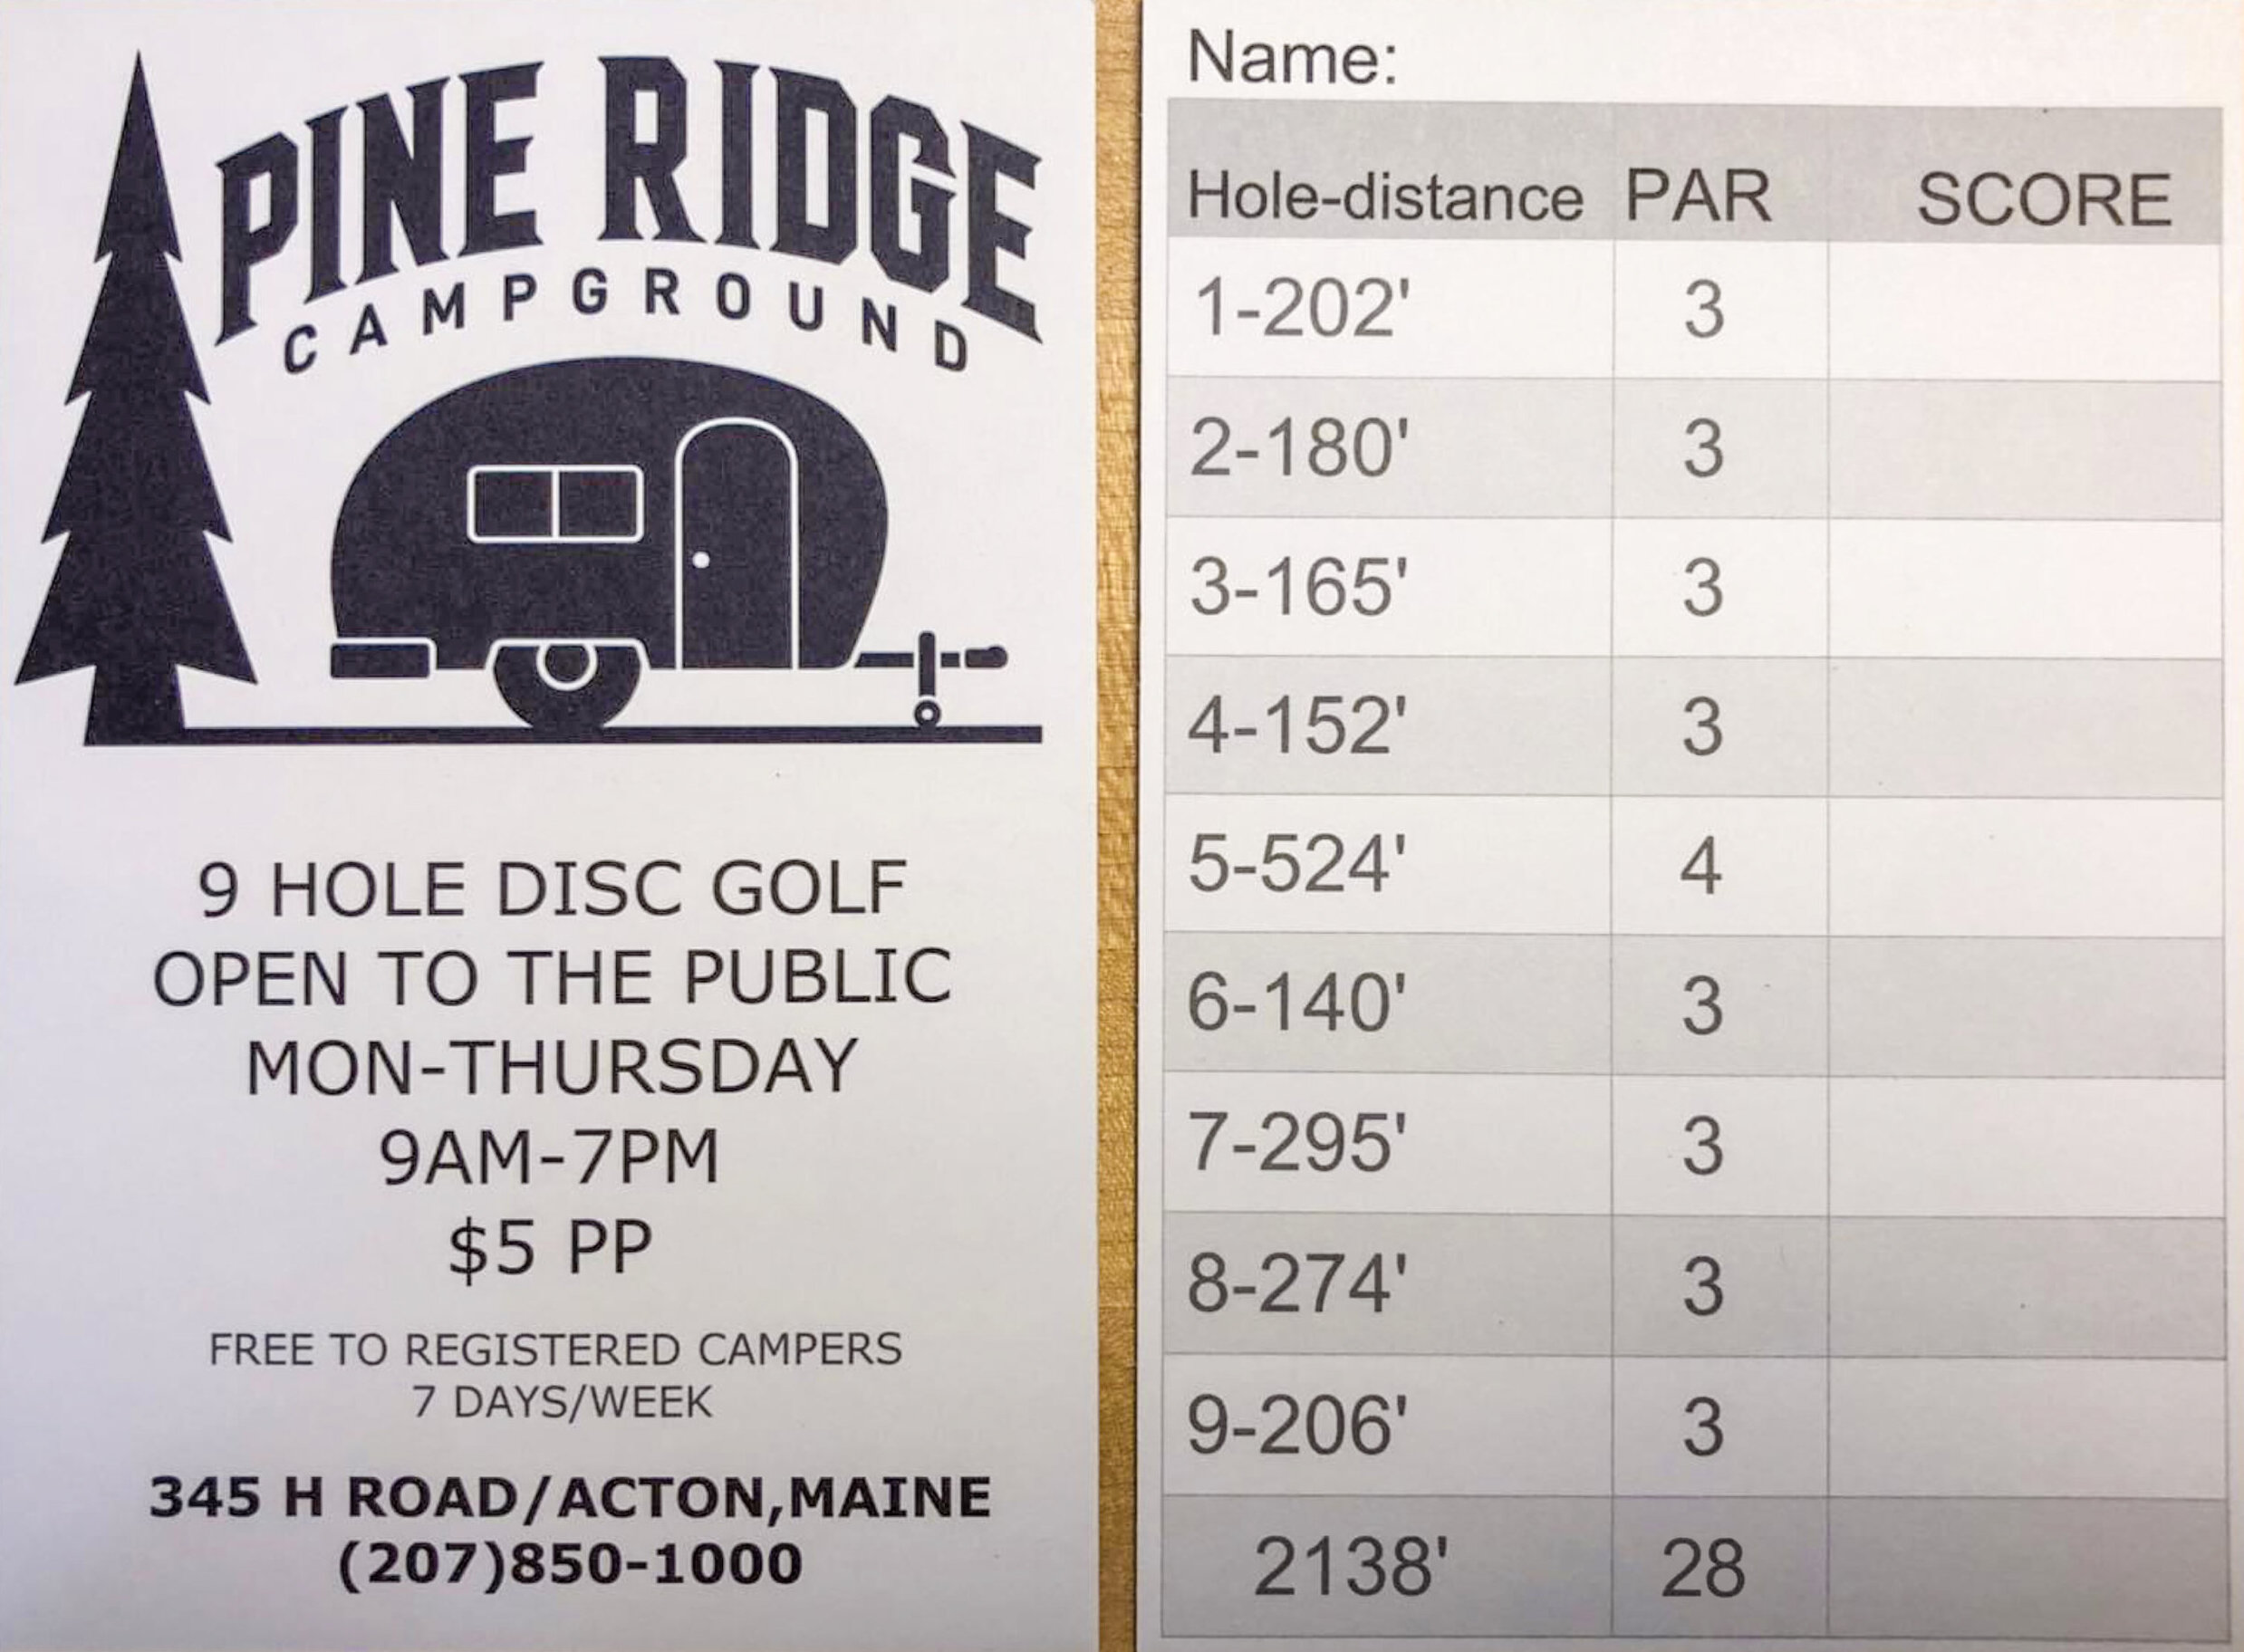 pine ridge campground disc golf score card